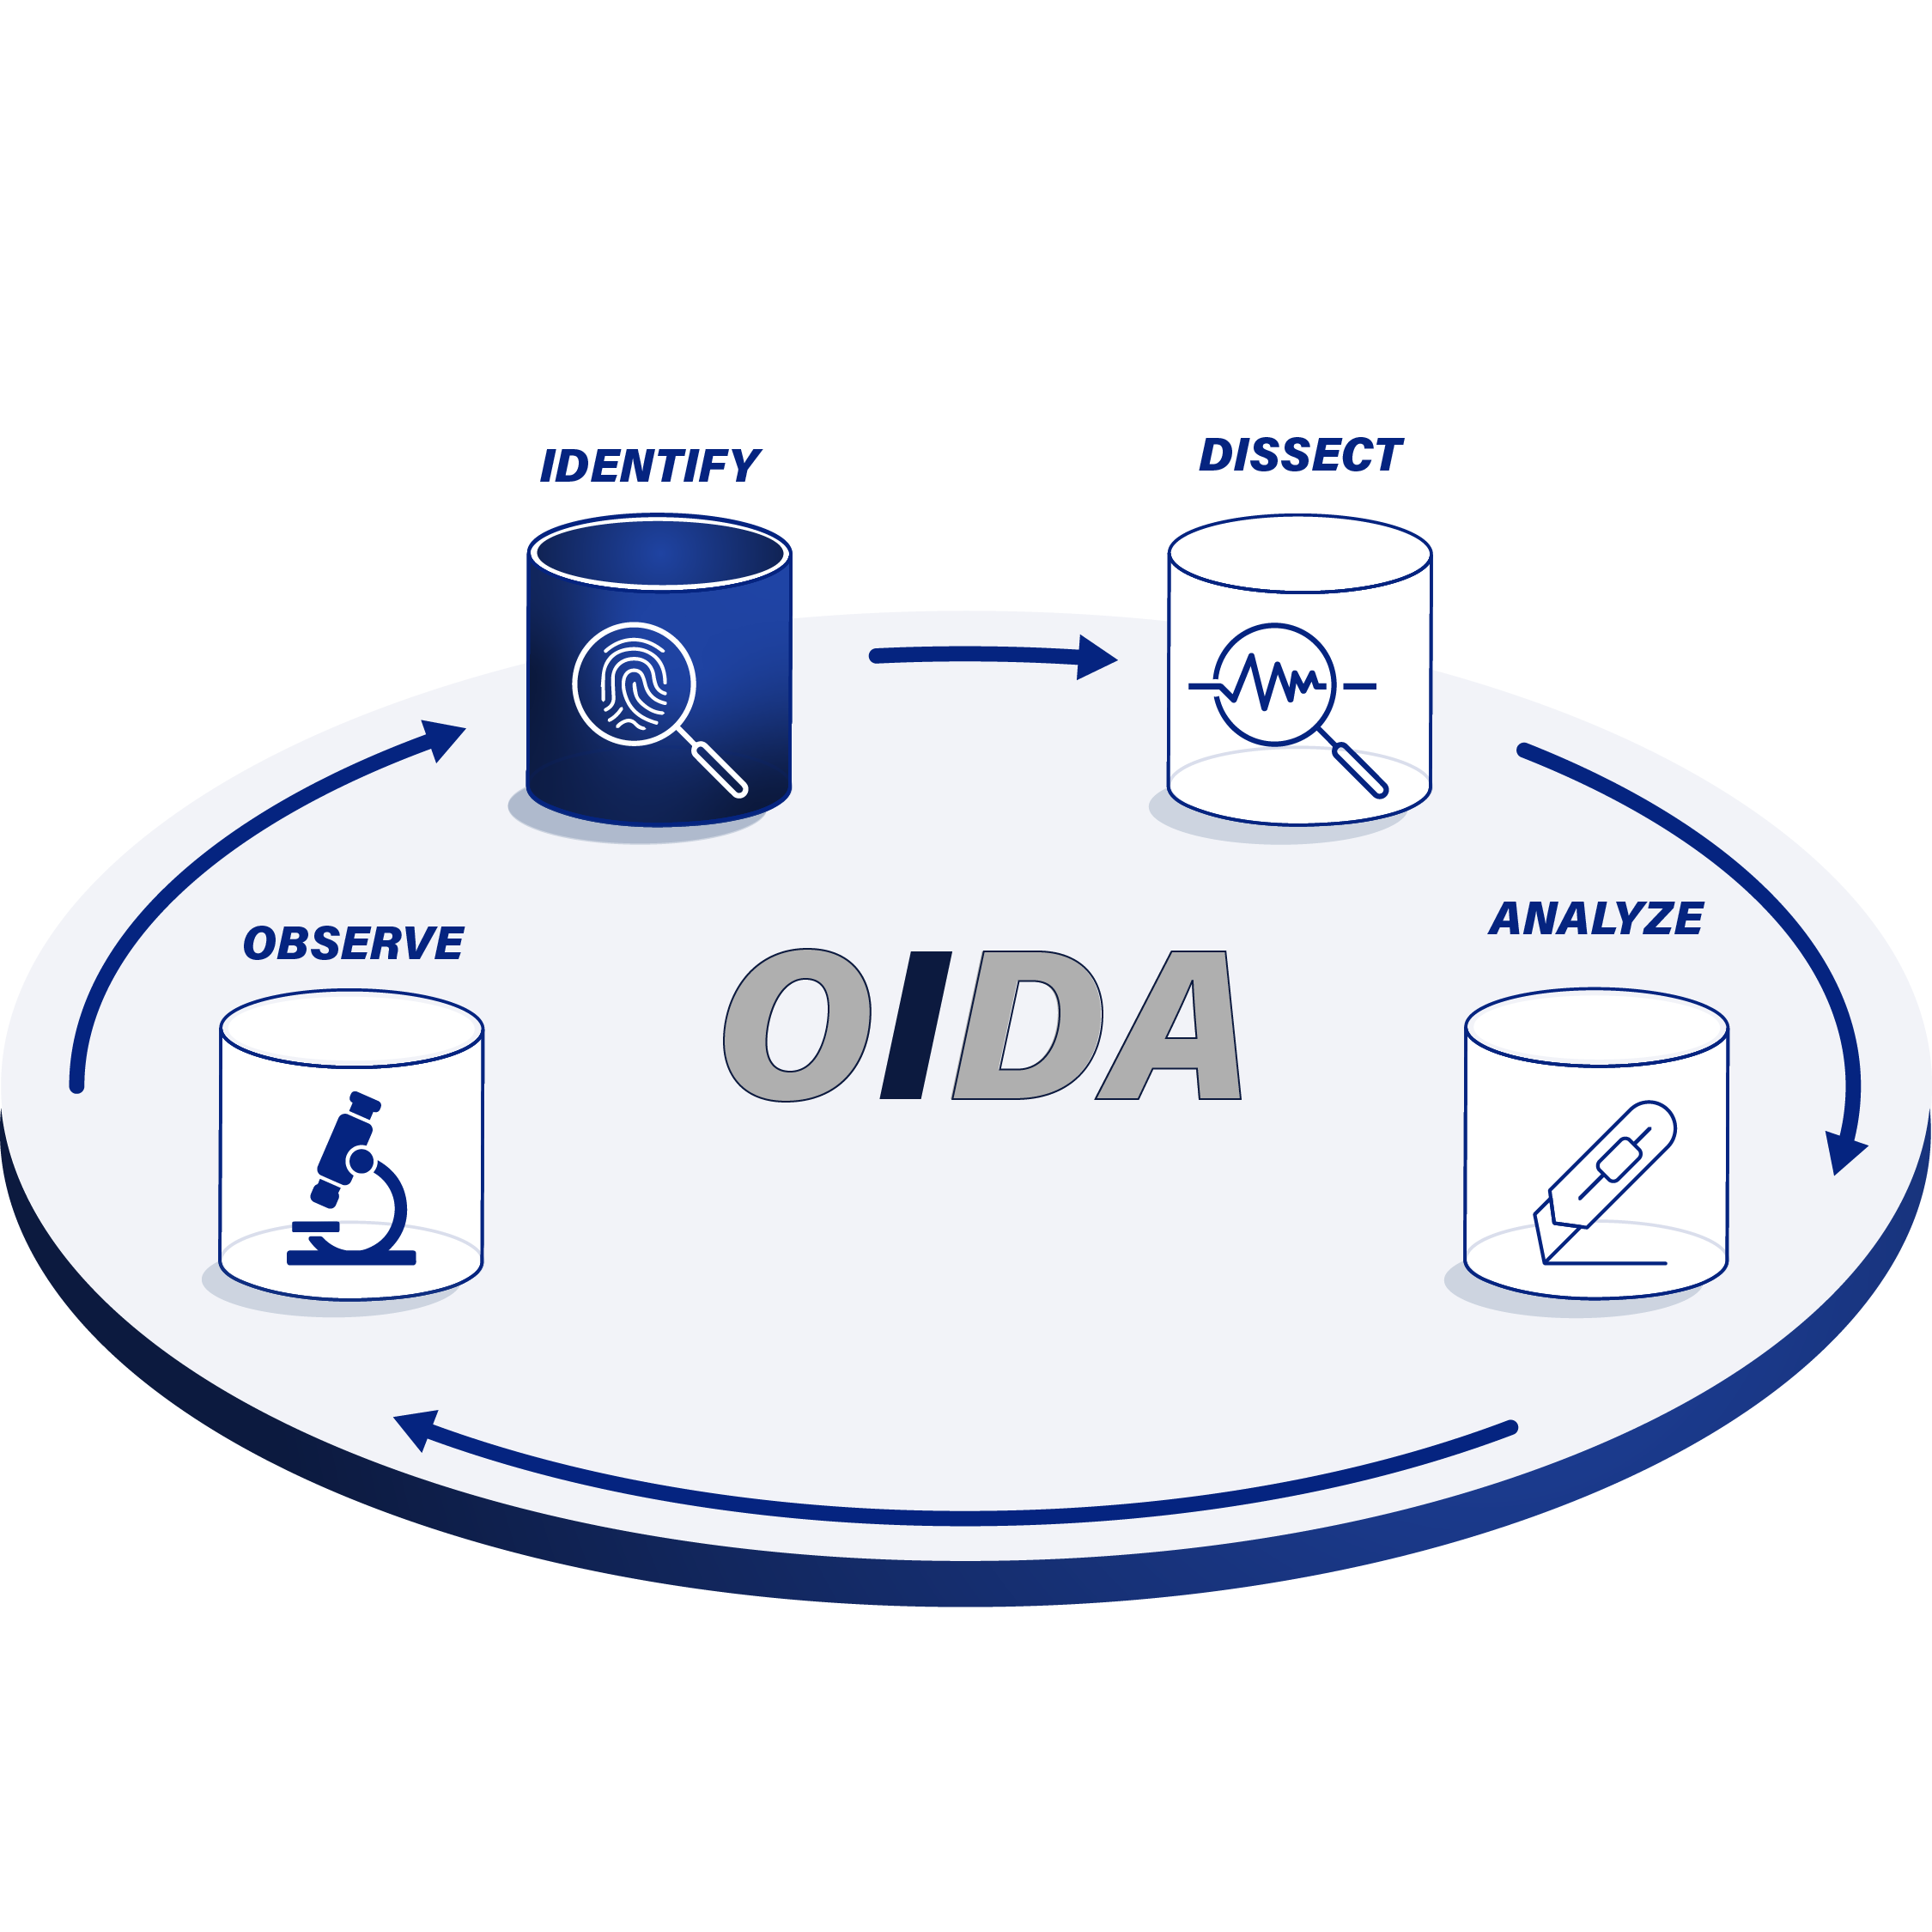 OIDA: Mastering Packet Analysis - The Art of Identification